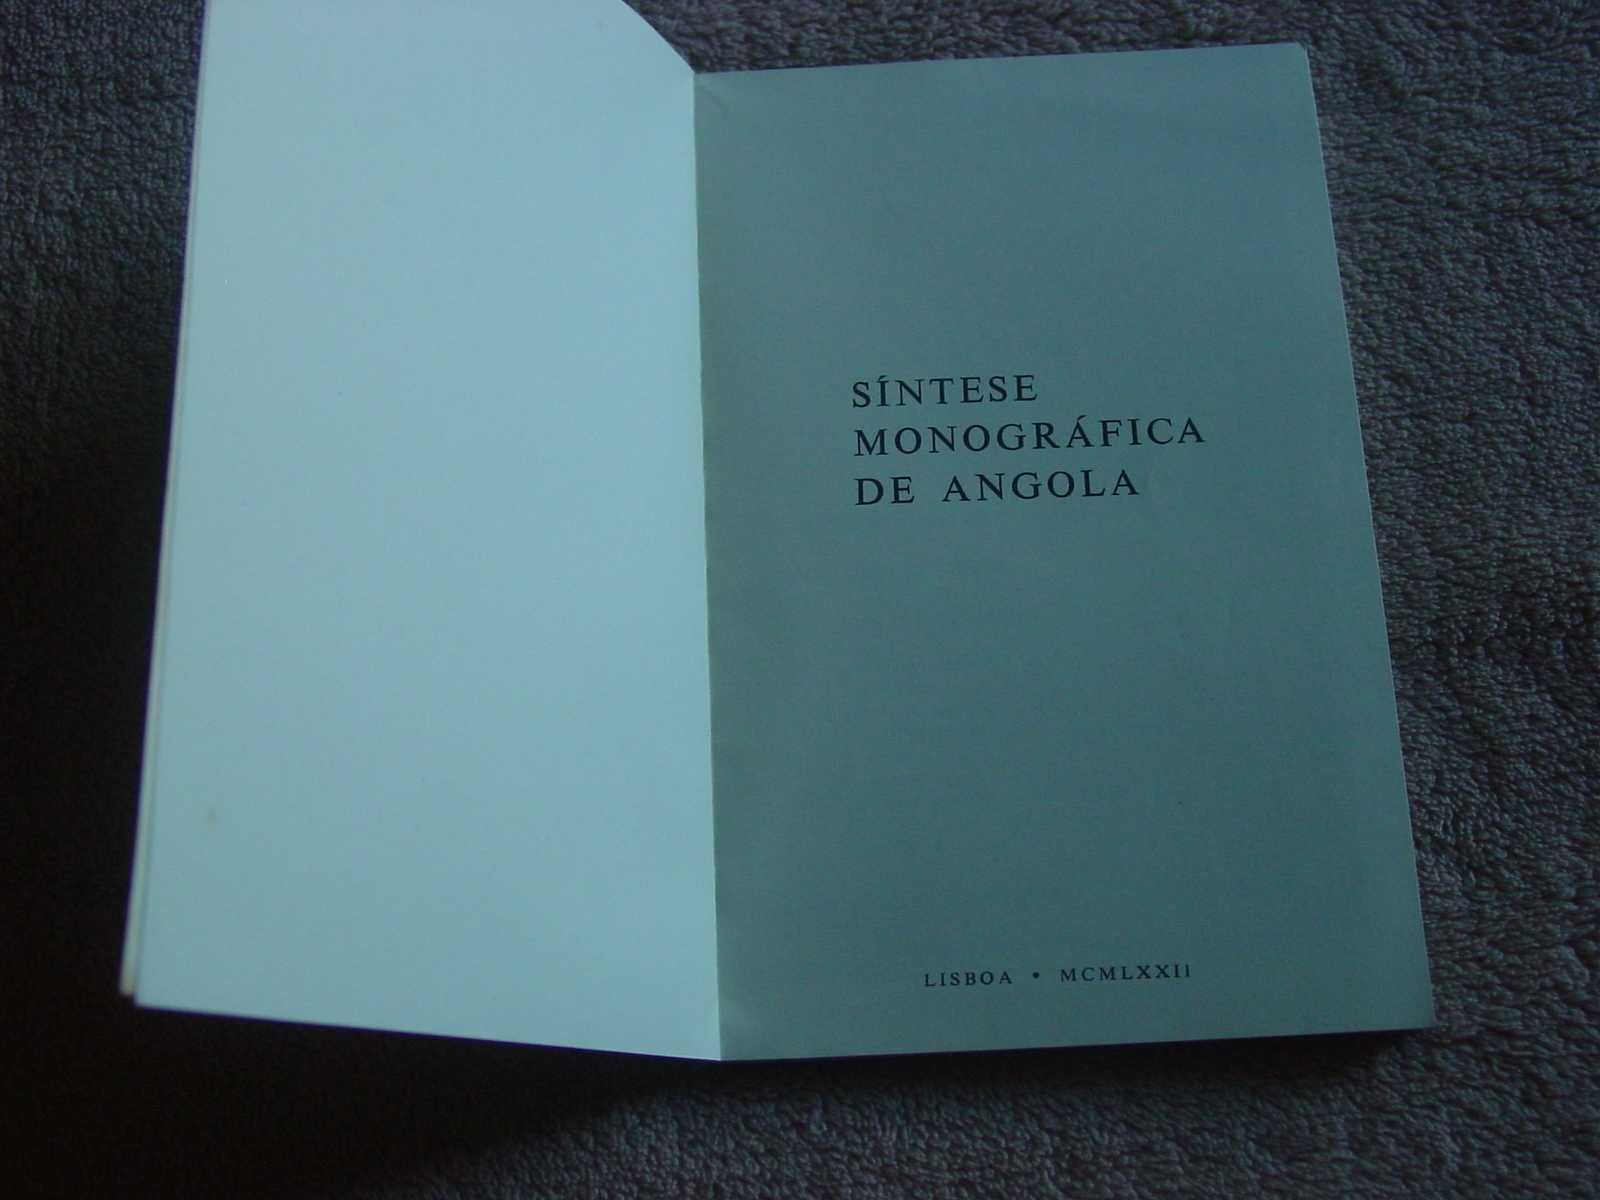 Livro " Província de Angola" - síntese monográfica do Estado Novo